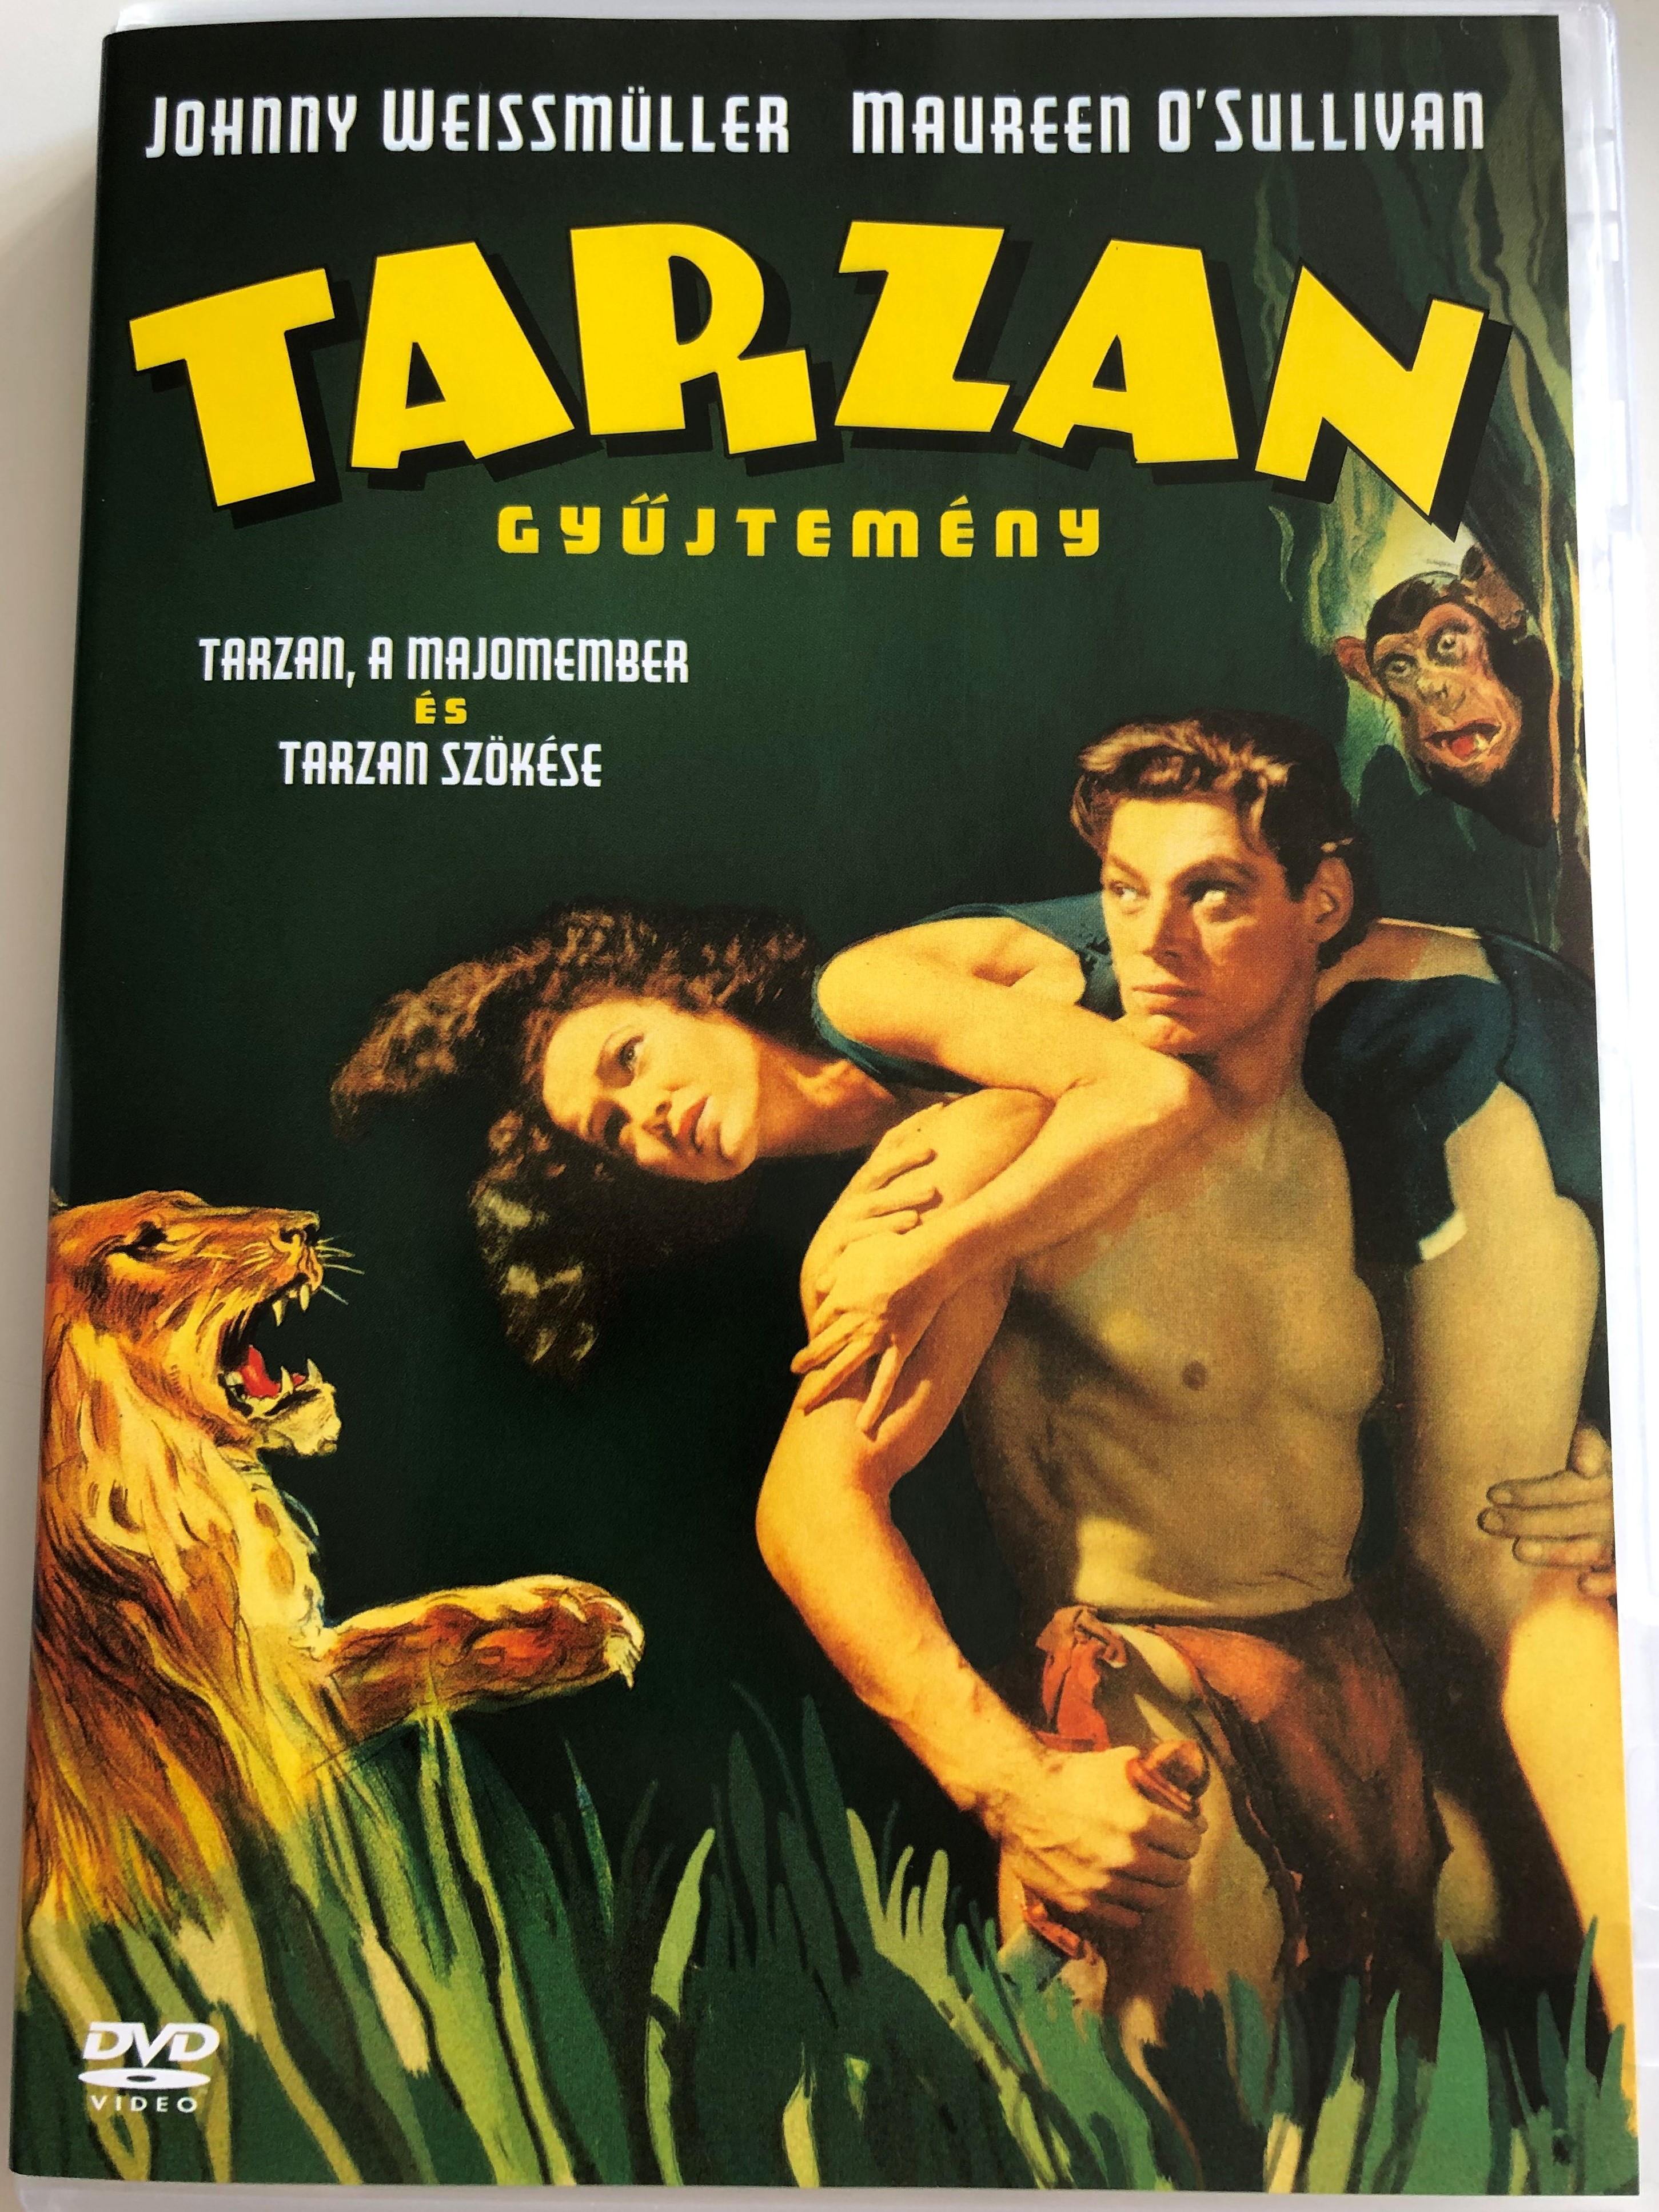 Tarzan Collection - Tarzan the ape man (1932) & Tarzan escapes (1936) DVD /  Tarzan Gyűjtemény / Tarzan a majomember, Tarzan szökése / Directed by W.S.  Van Dyke, Richard Thorpe / Starring: